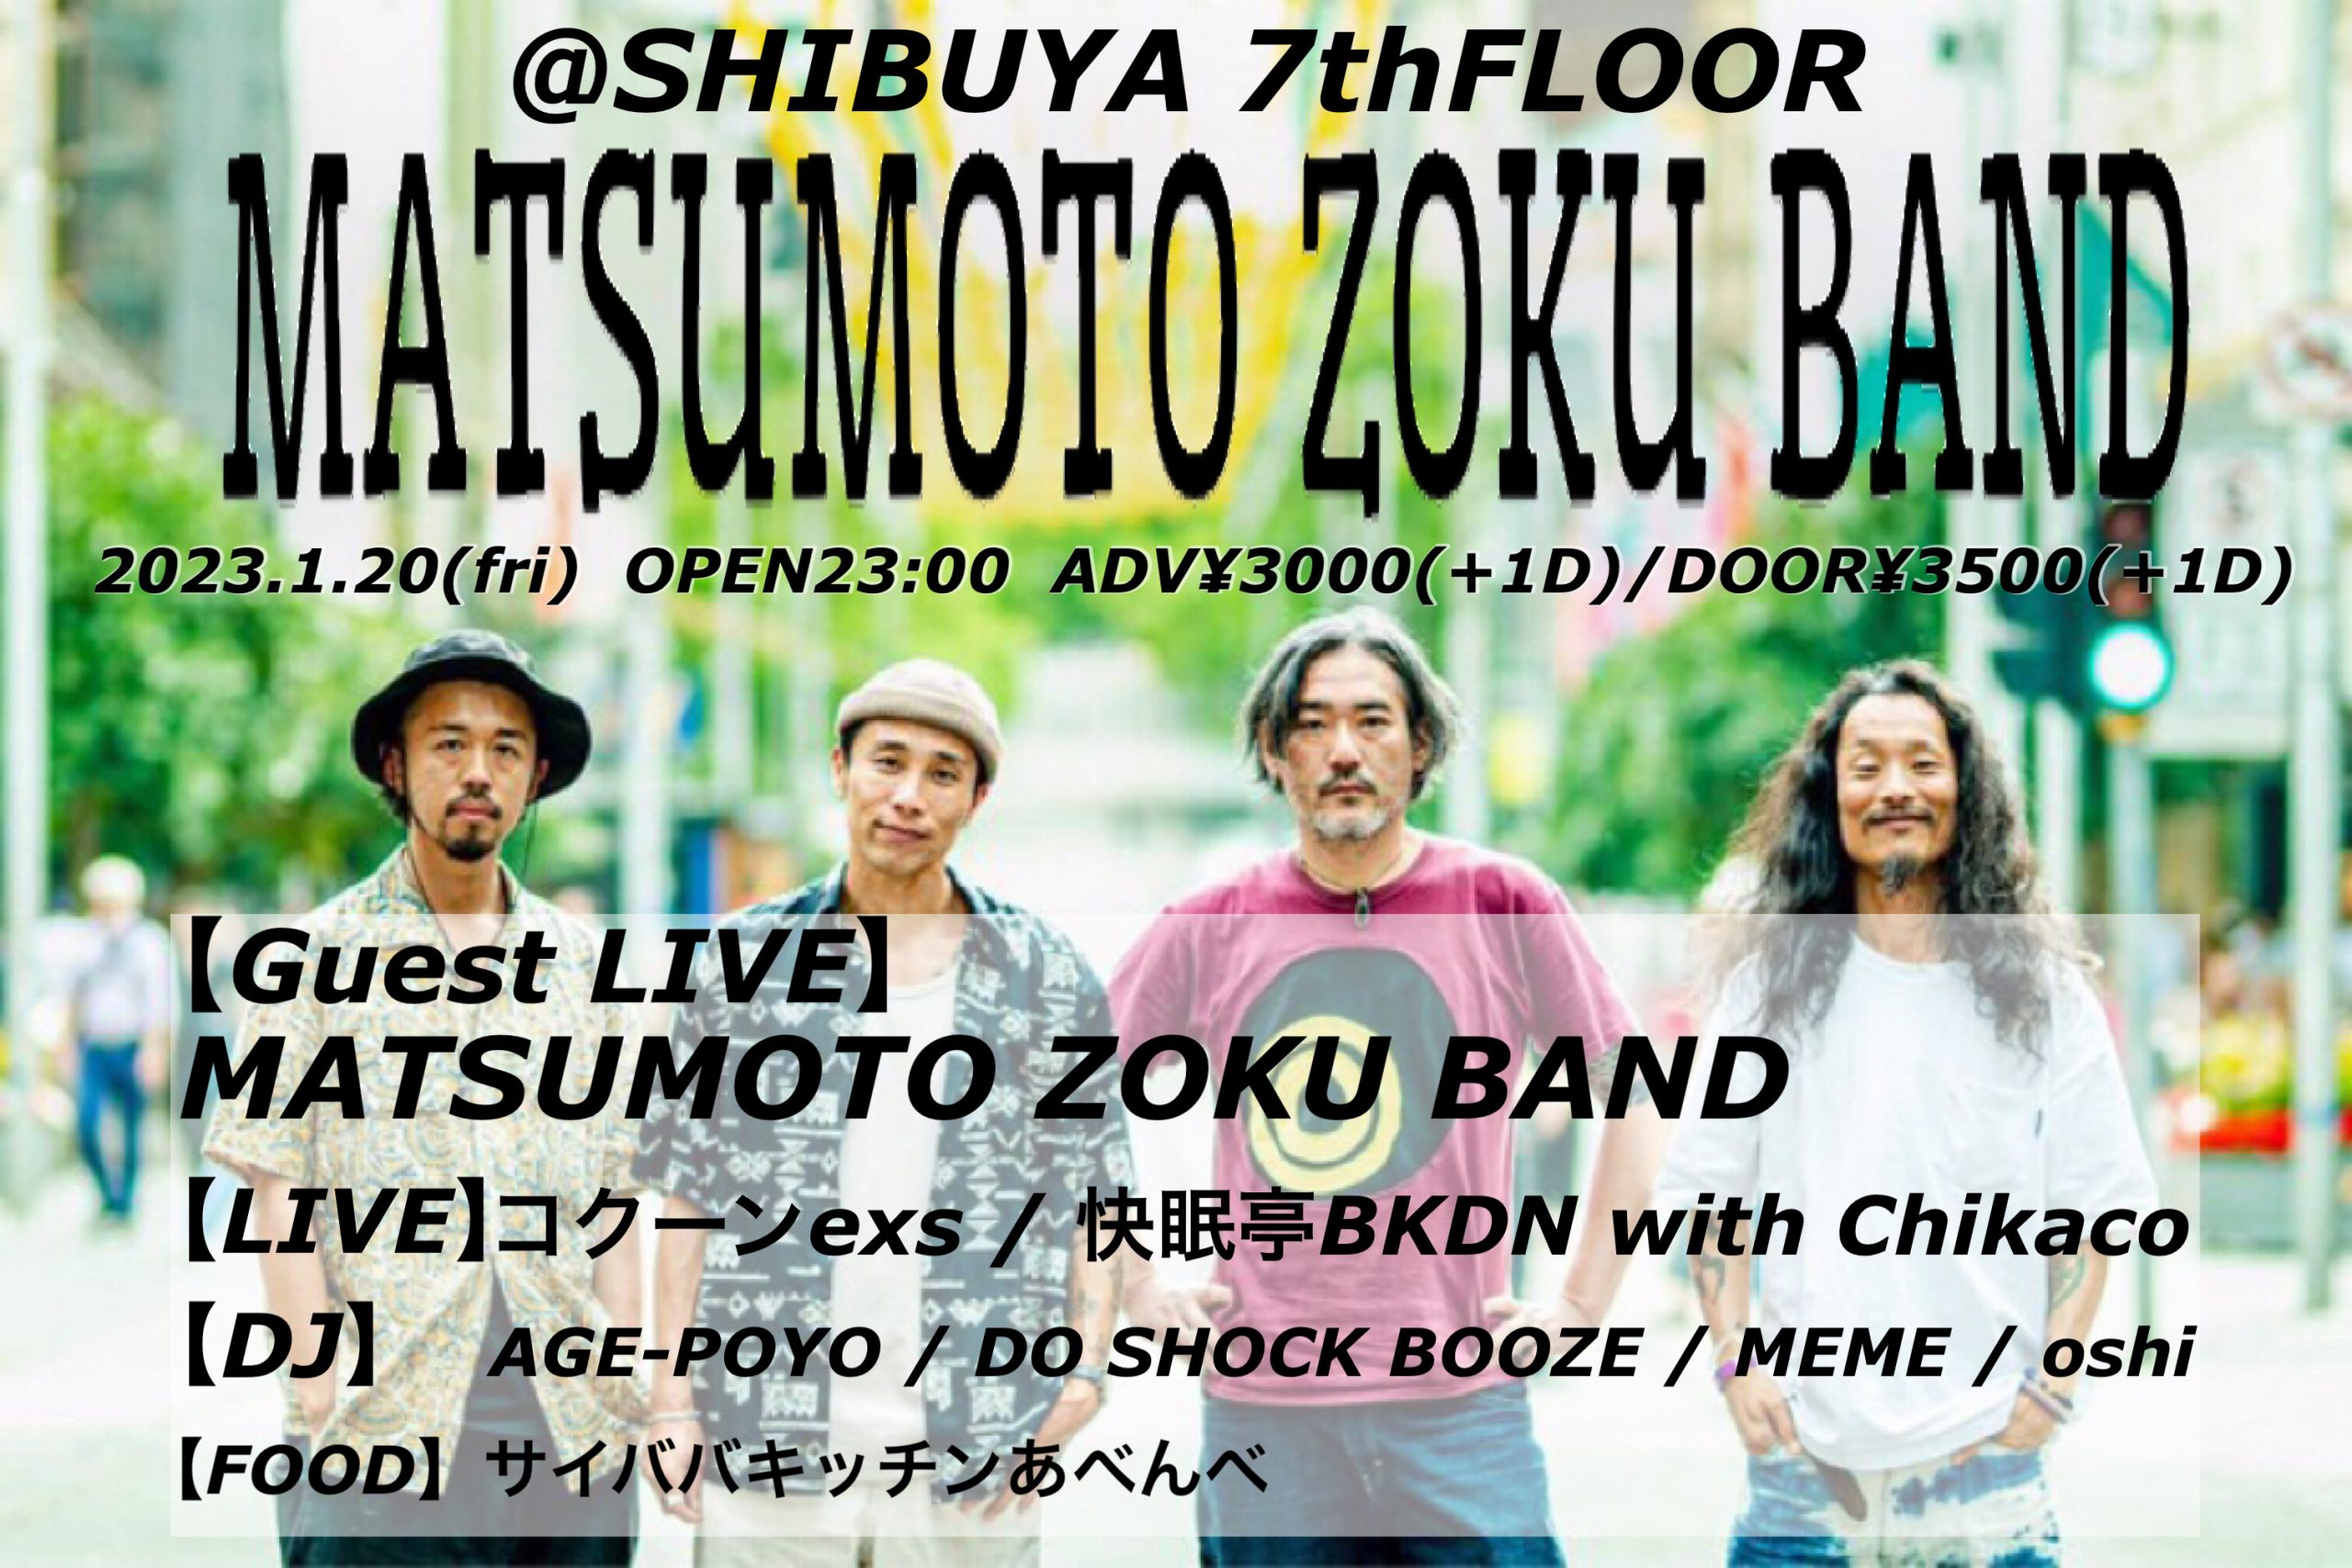 “MATSUMOTO ZOKU BAND -Australia tour jungle after party-“